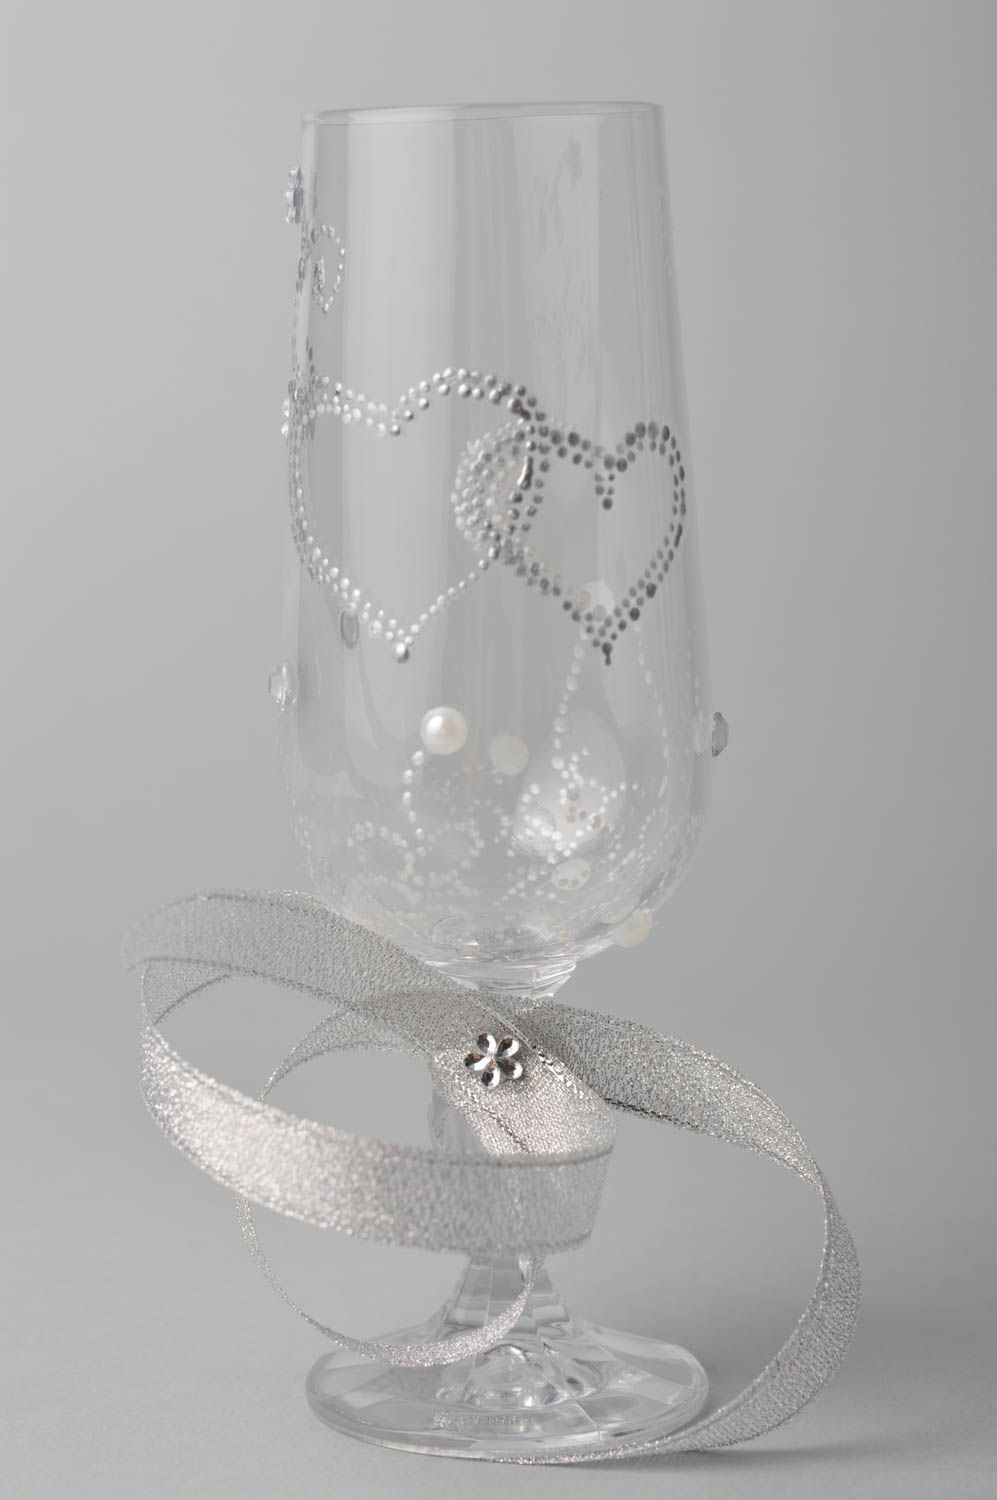 Handmade glasses wedding glasses for newlyweds wedding decor beautiful glasses photo 2